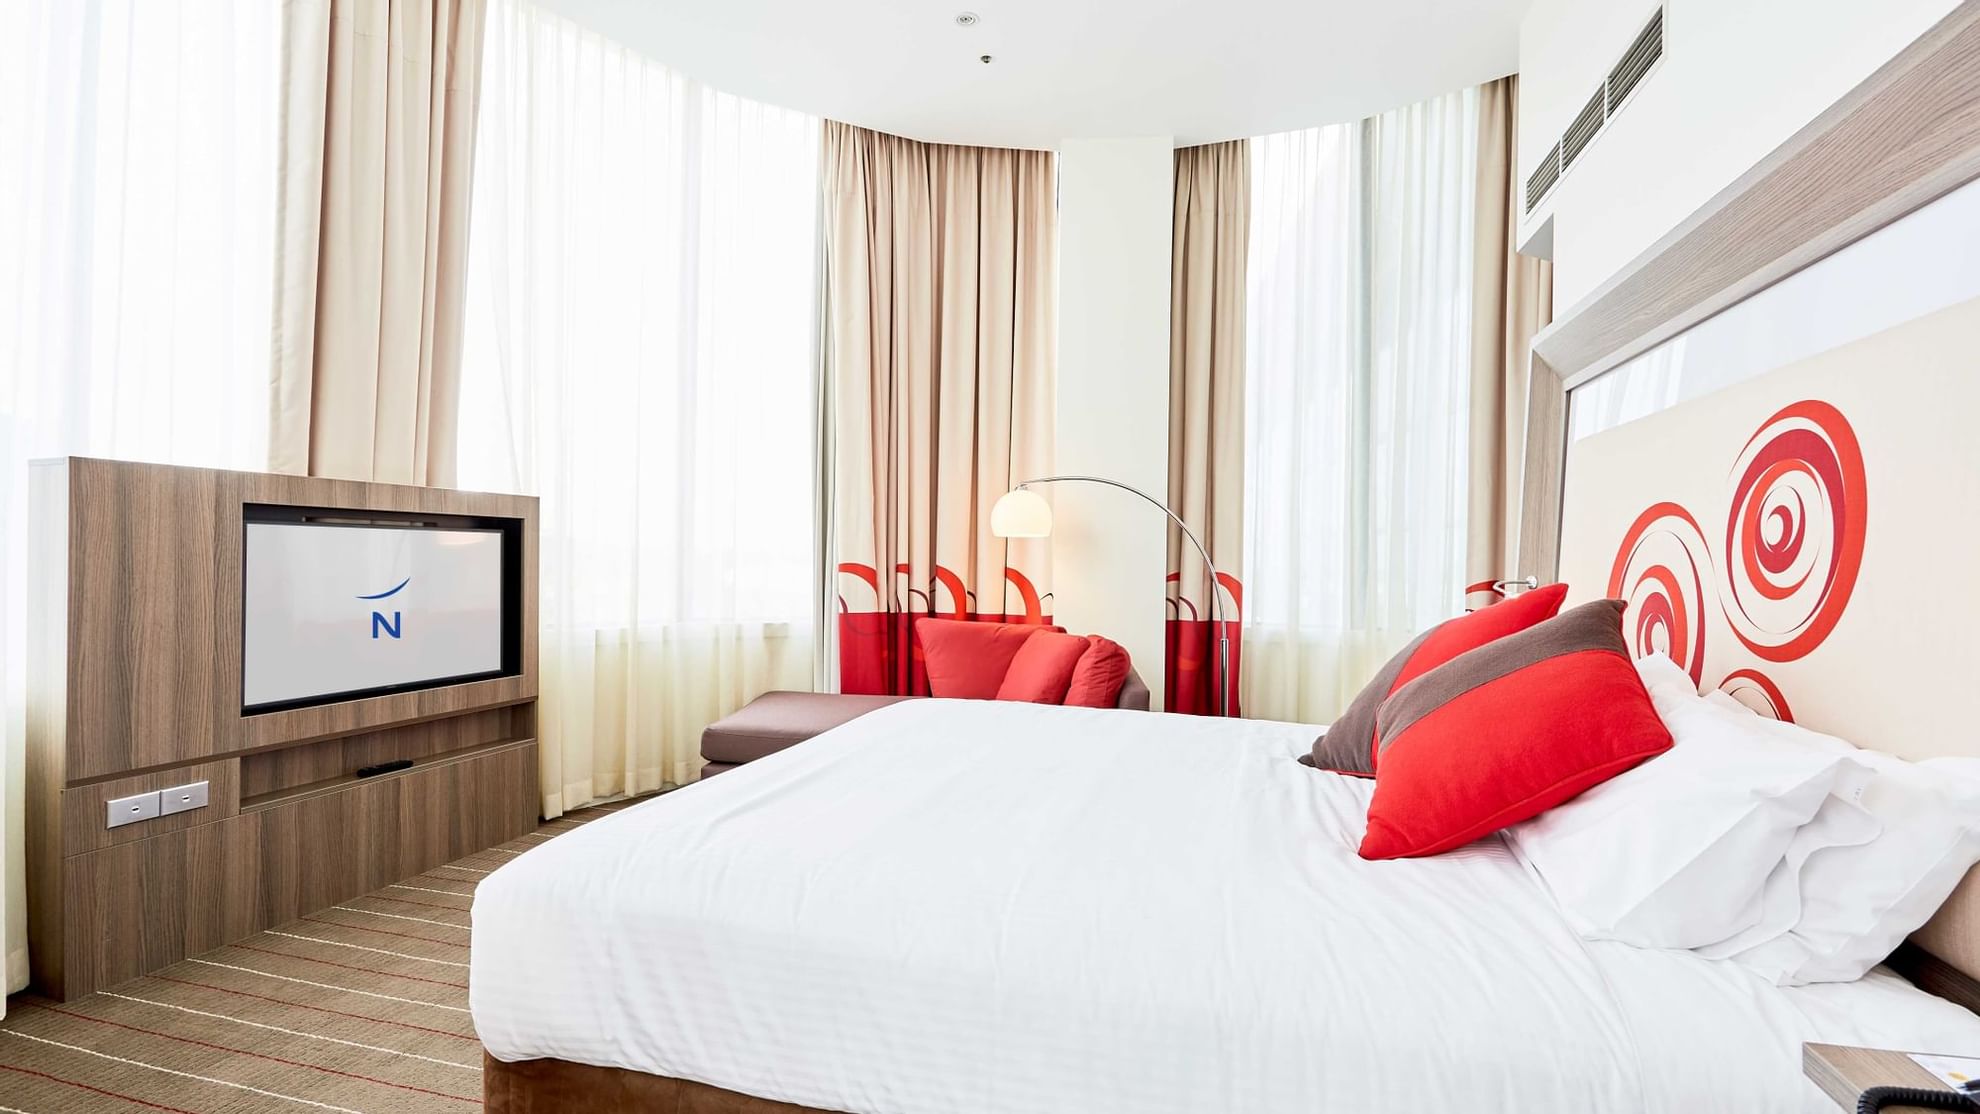 Bed & lounge in Junior King Hotel Suite, Novotel Glen Waverley